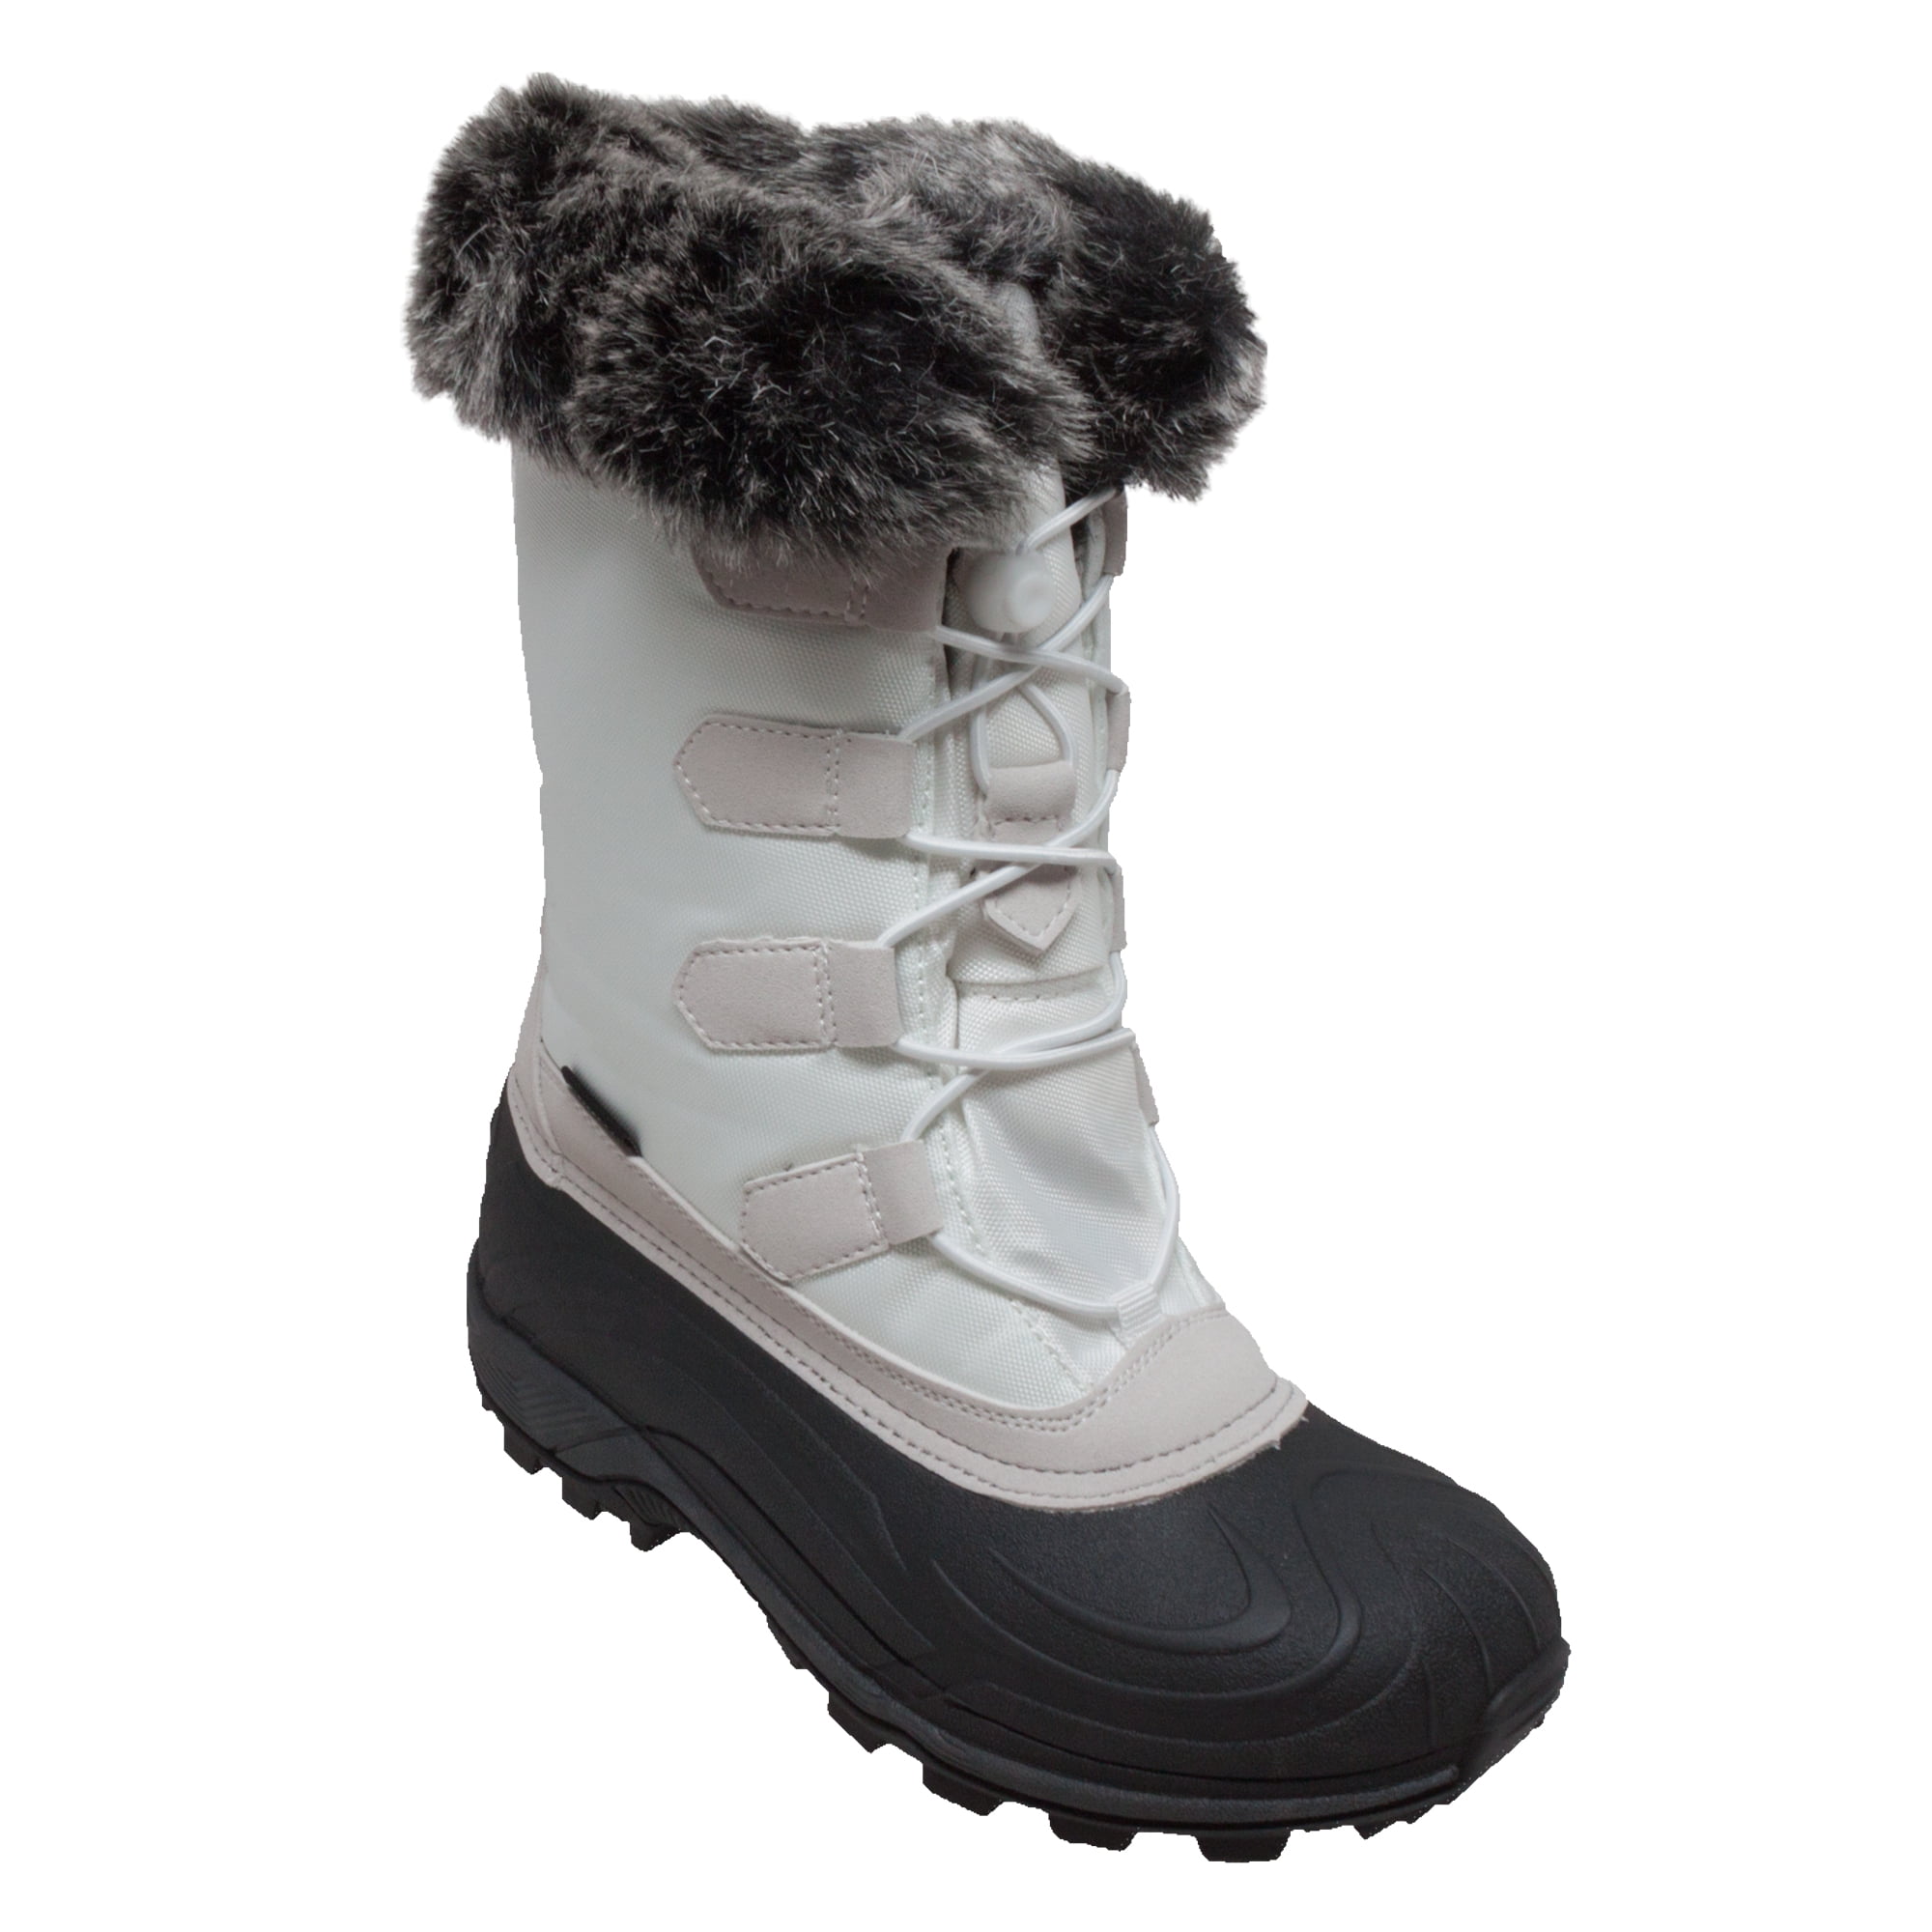 Women's Nylon Winter Boots White - Walmart.com